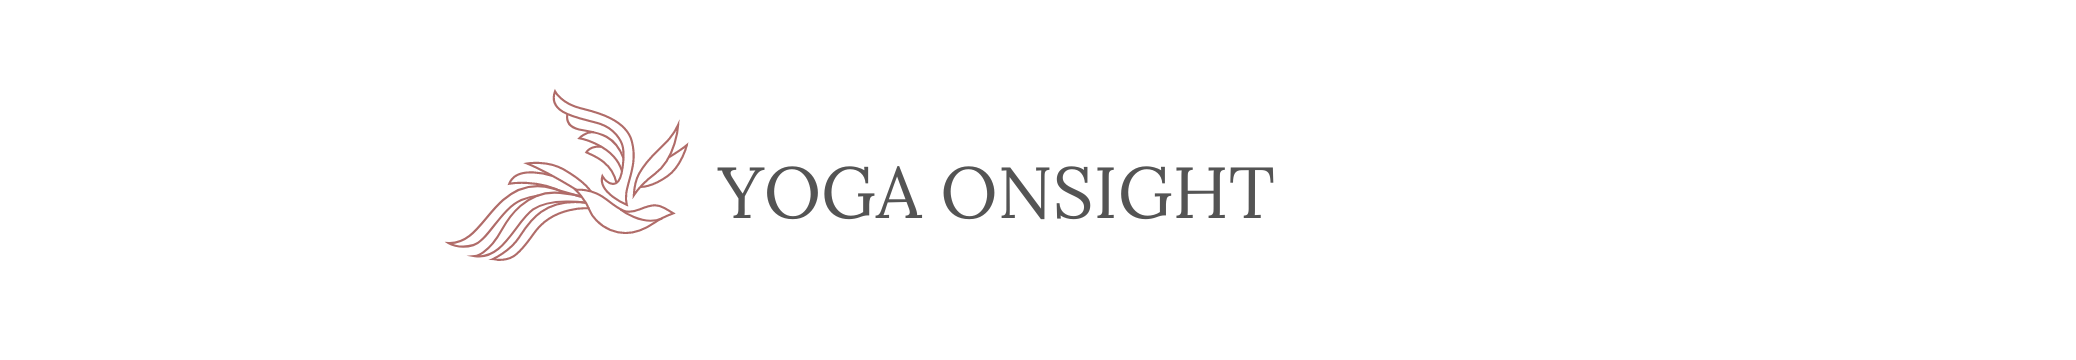 Yoga Onsight